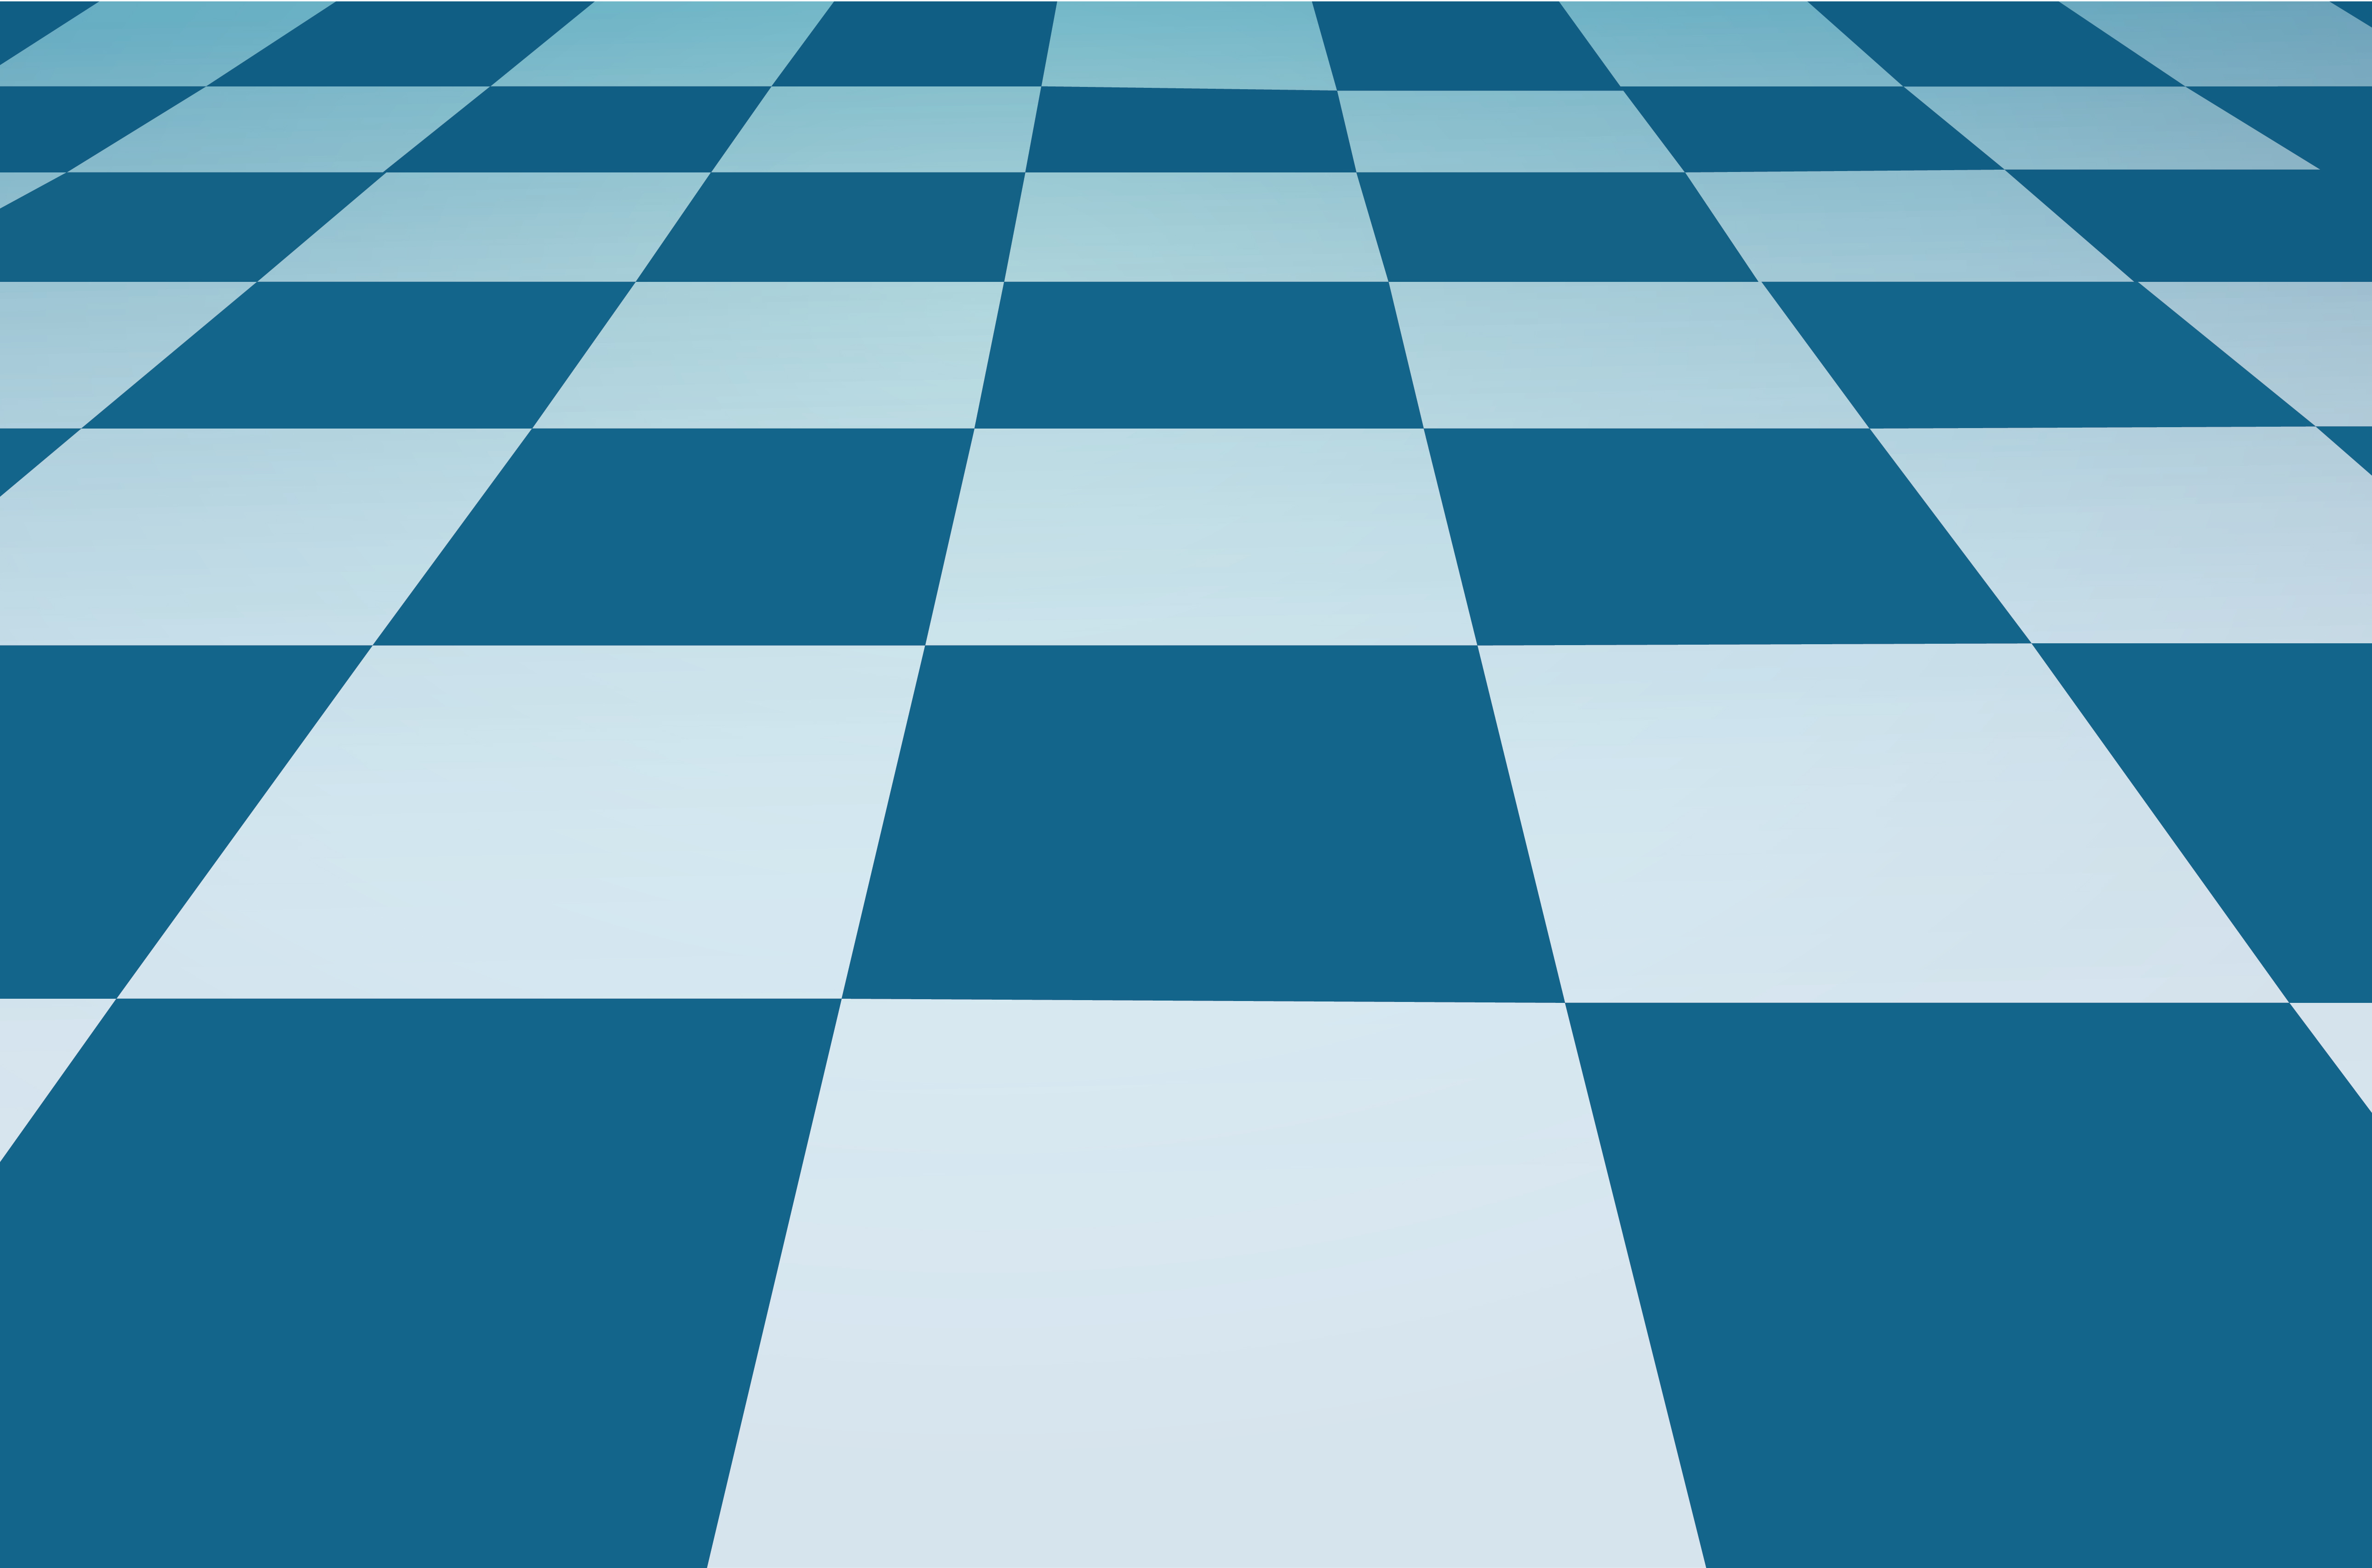 Tabuleiro de Jogo de Xadrez 3d Render isolado fundo branco vista de  perspectiva Stock Illustration